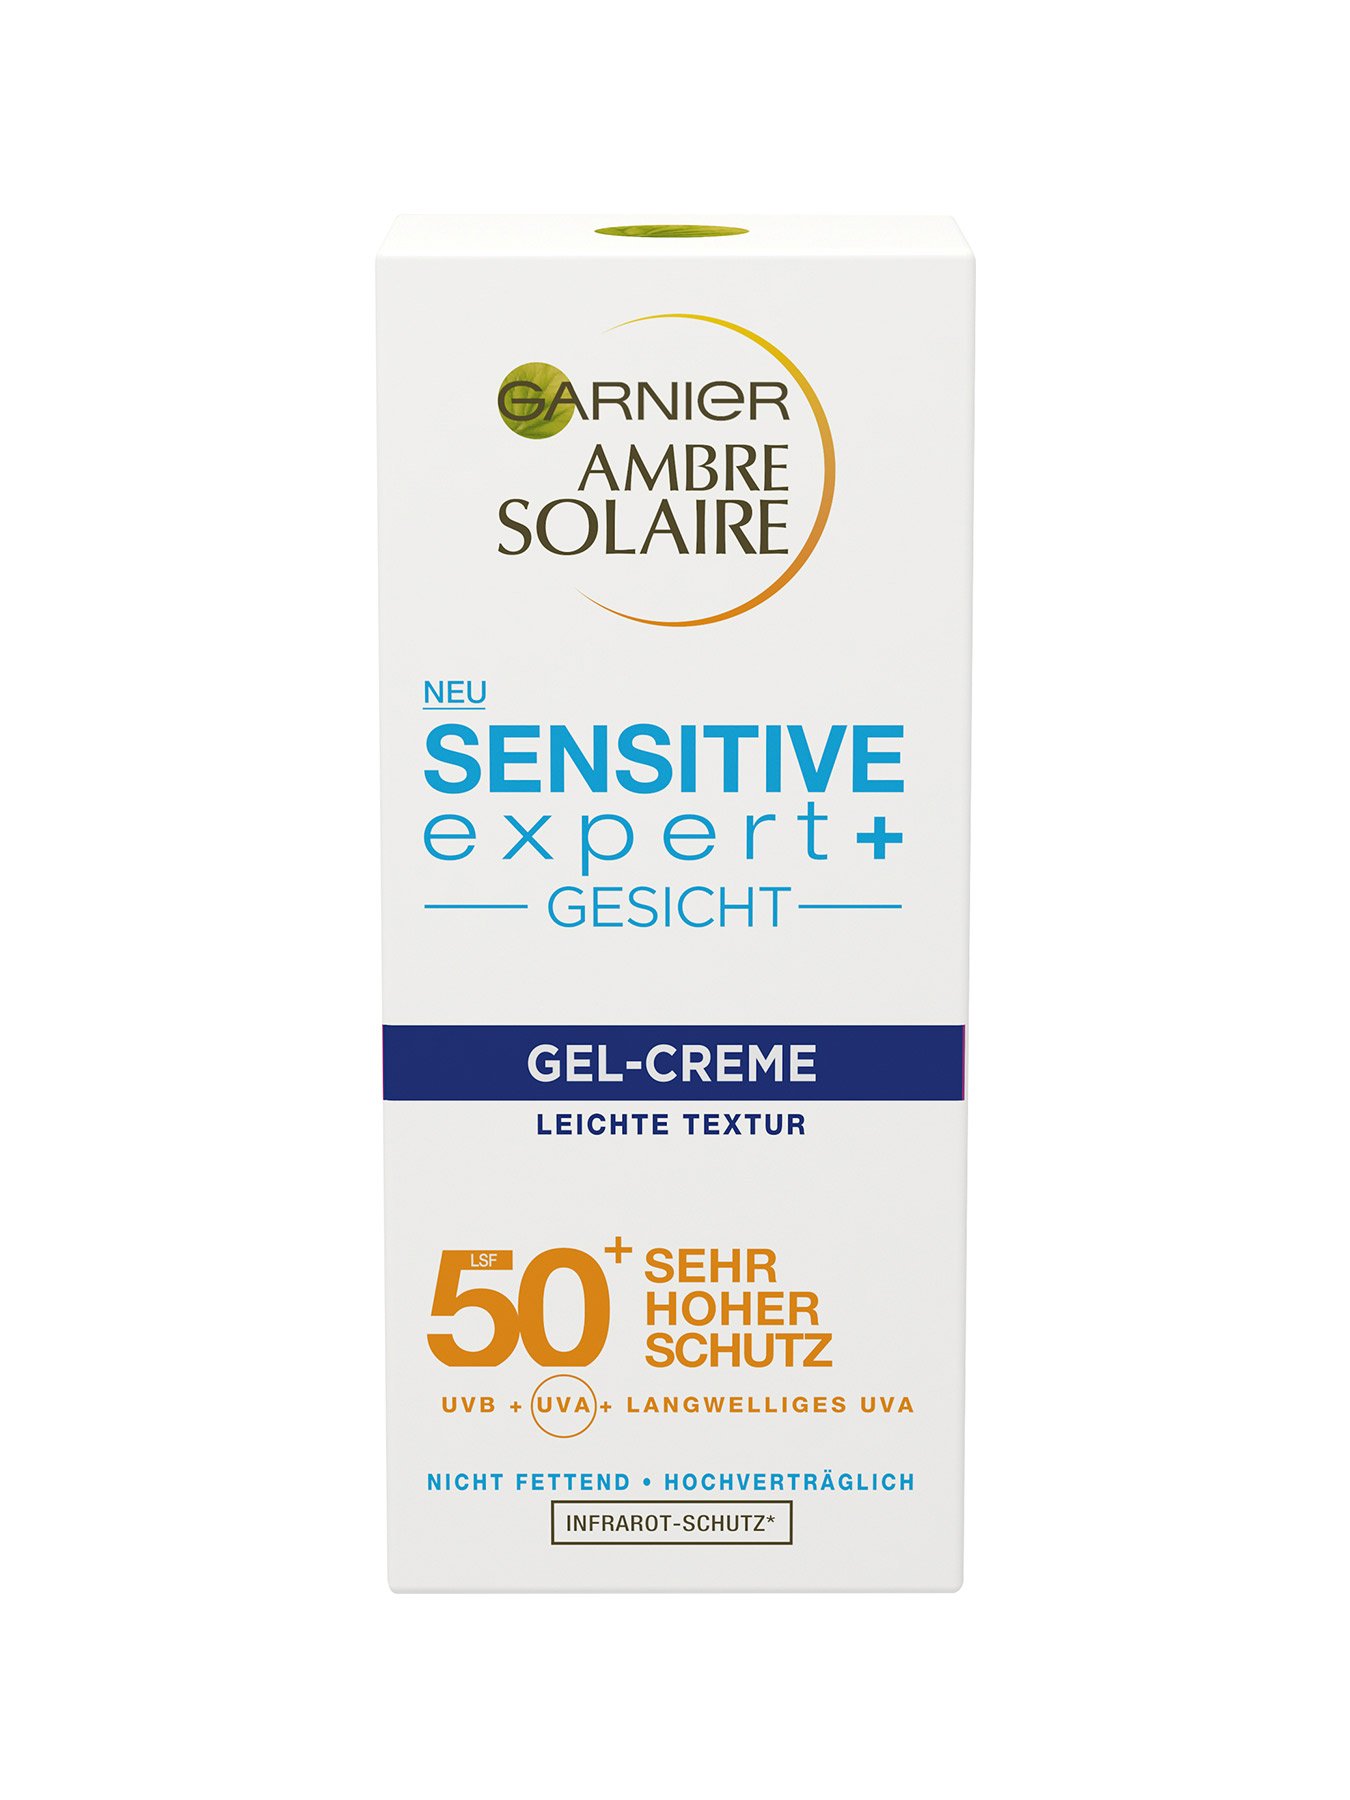 Ambre Solaire Sensitive expert+ LSF 50+ Gesicht Gel-Creme | Garnier